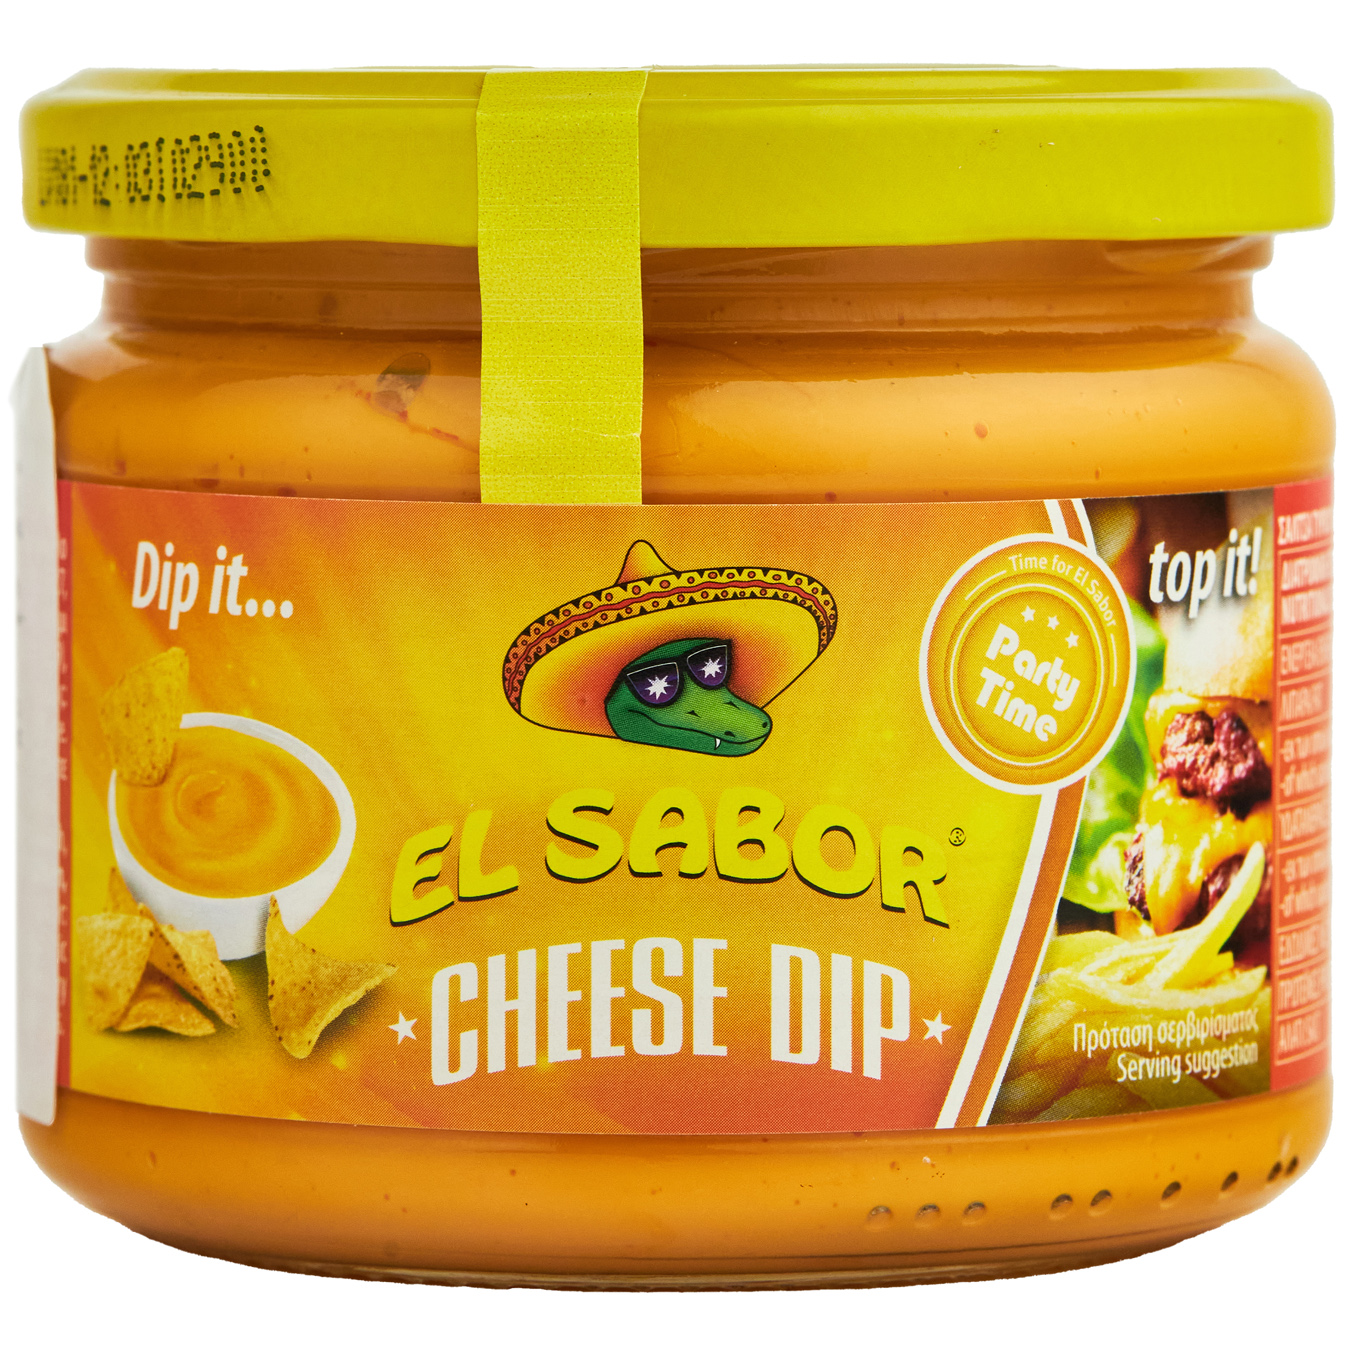 EL Sabor Cheese Dip Sauce 300g